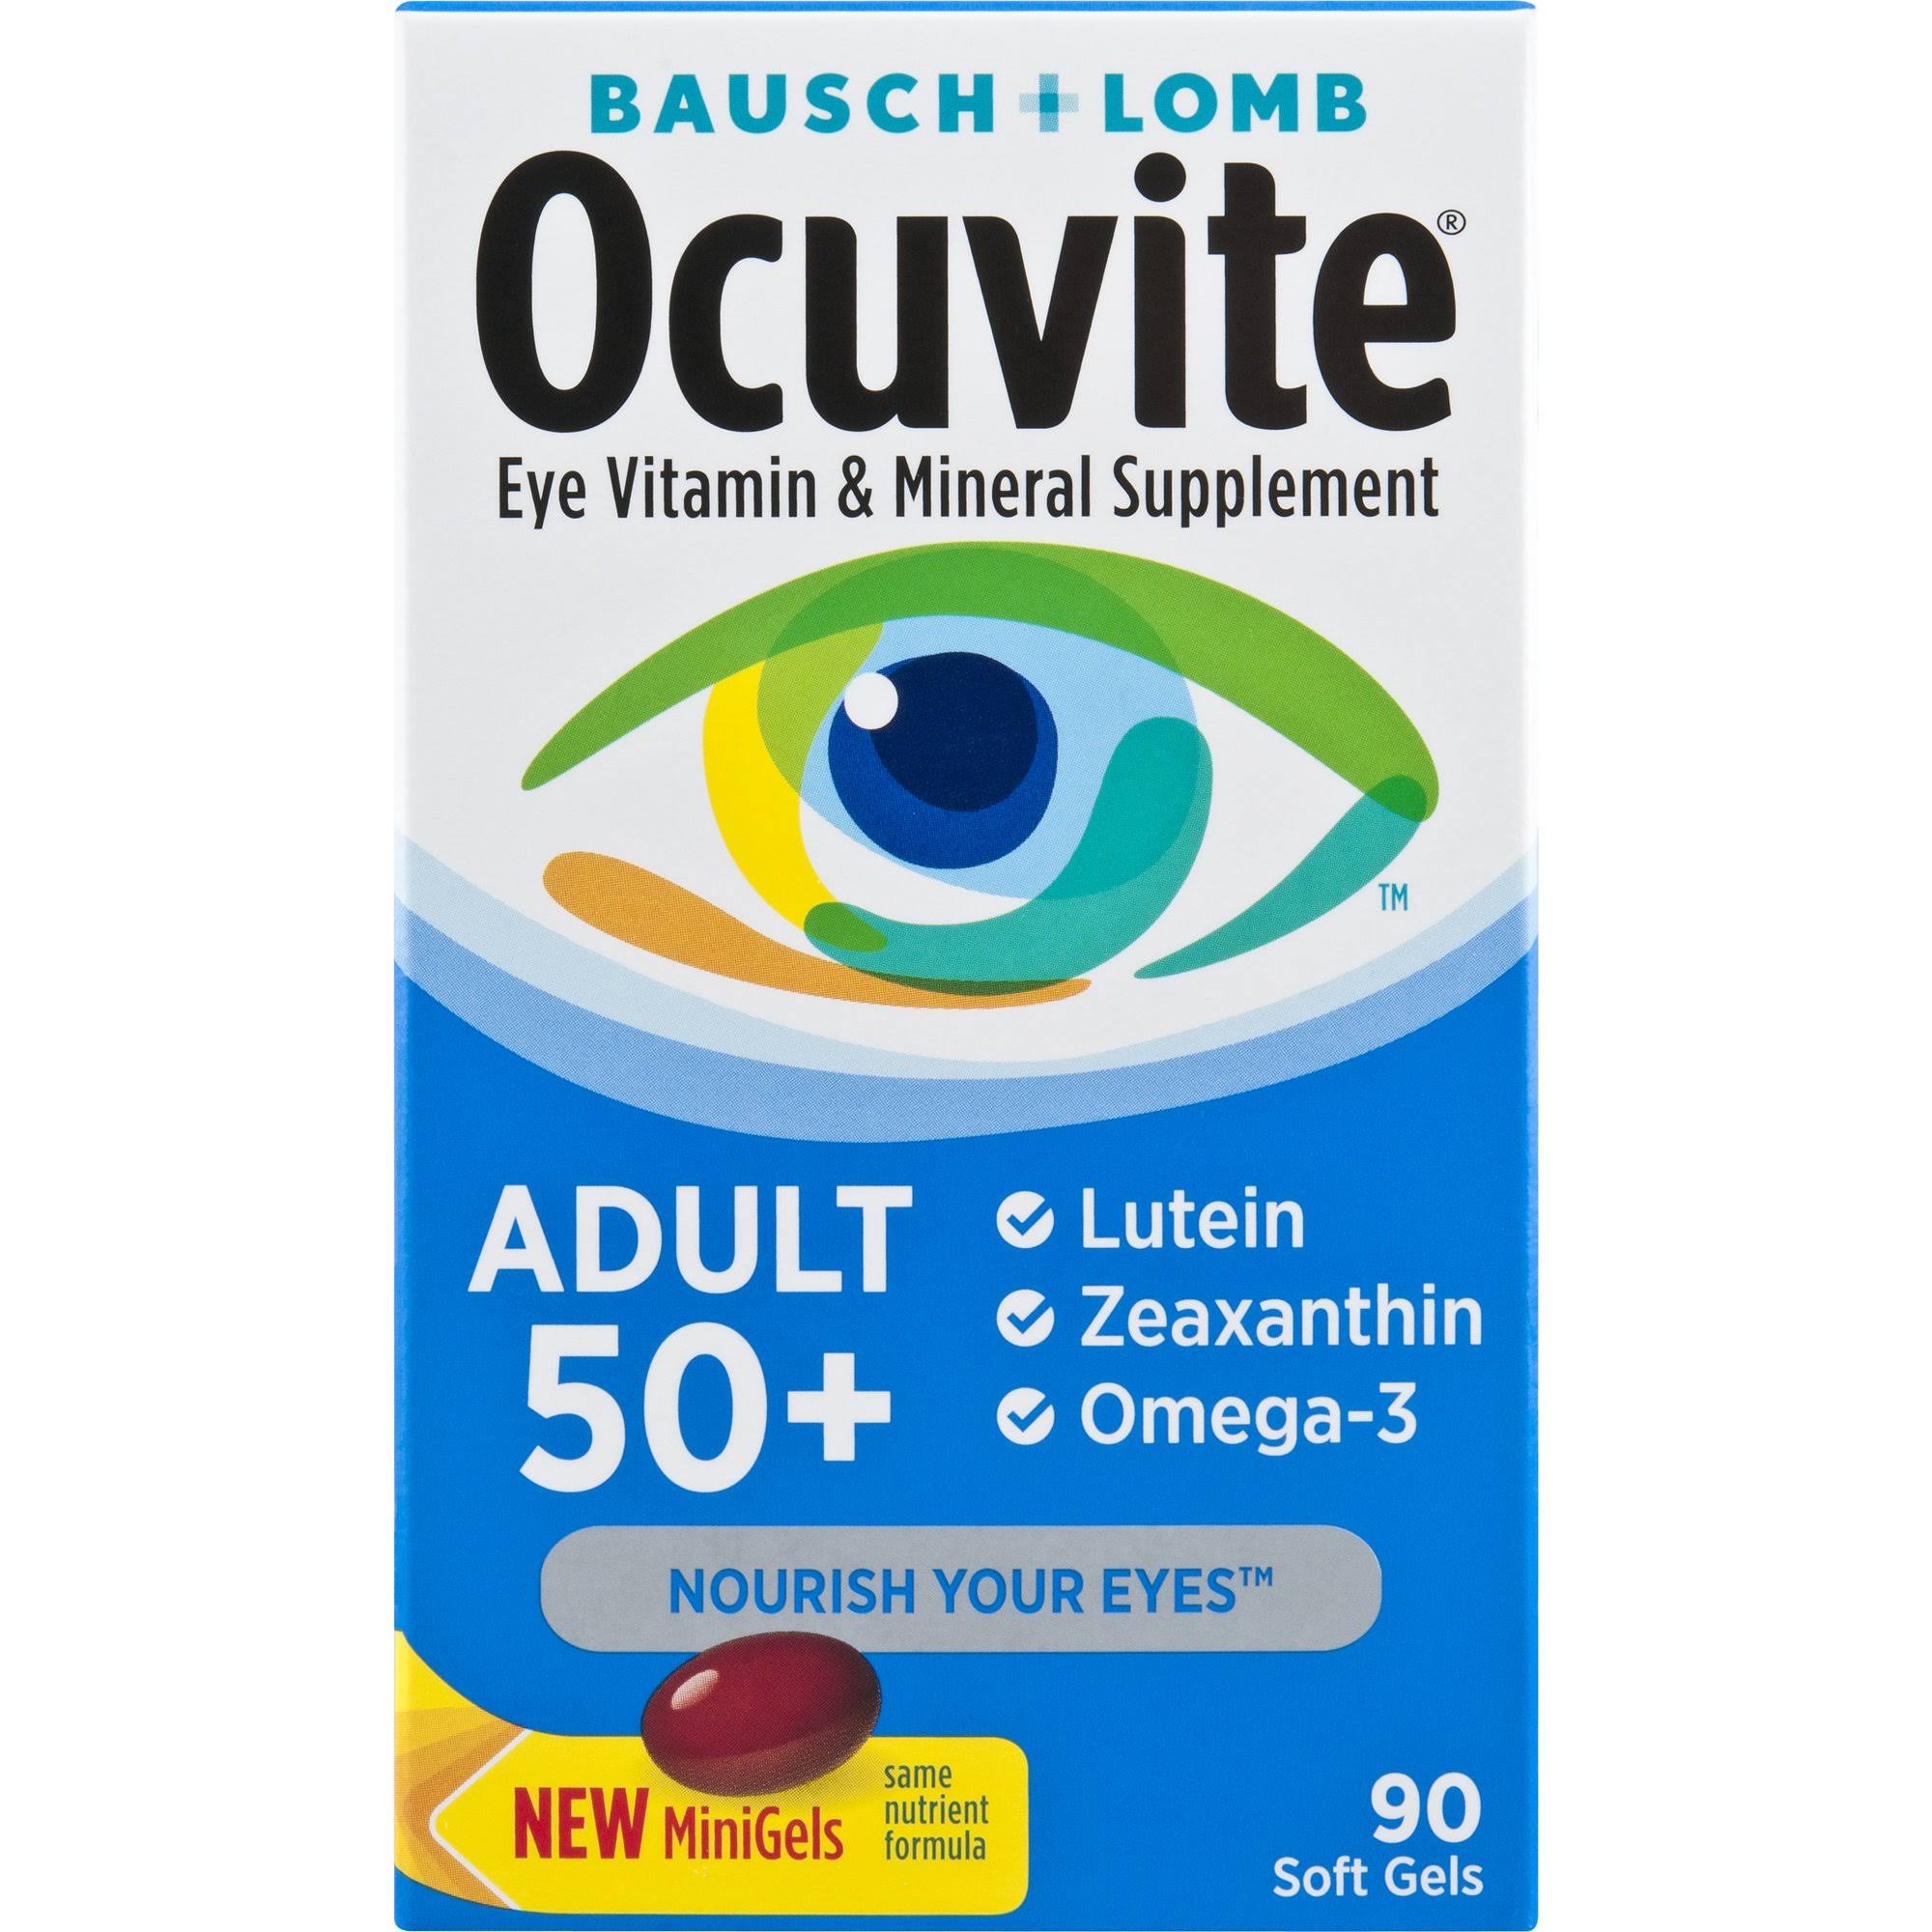 Bausch + Lomb Ocuvite Vitamin & Mineral Supplement - Adult 50+, x90